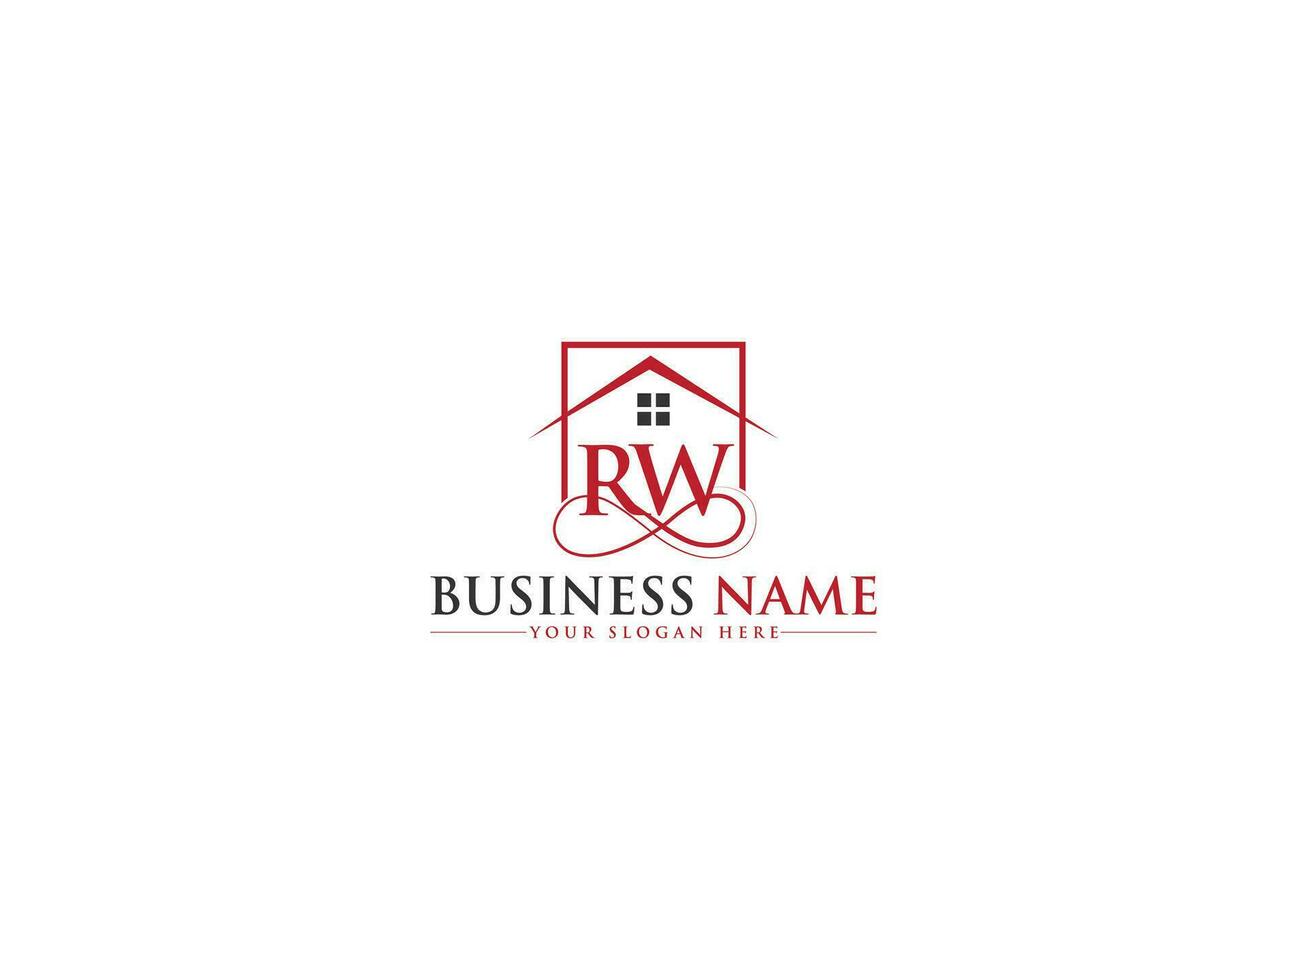 vistoso hogar rw logo símbolo, inicial real inmuebles rw edificio logo letra diseño vector